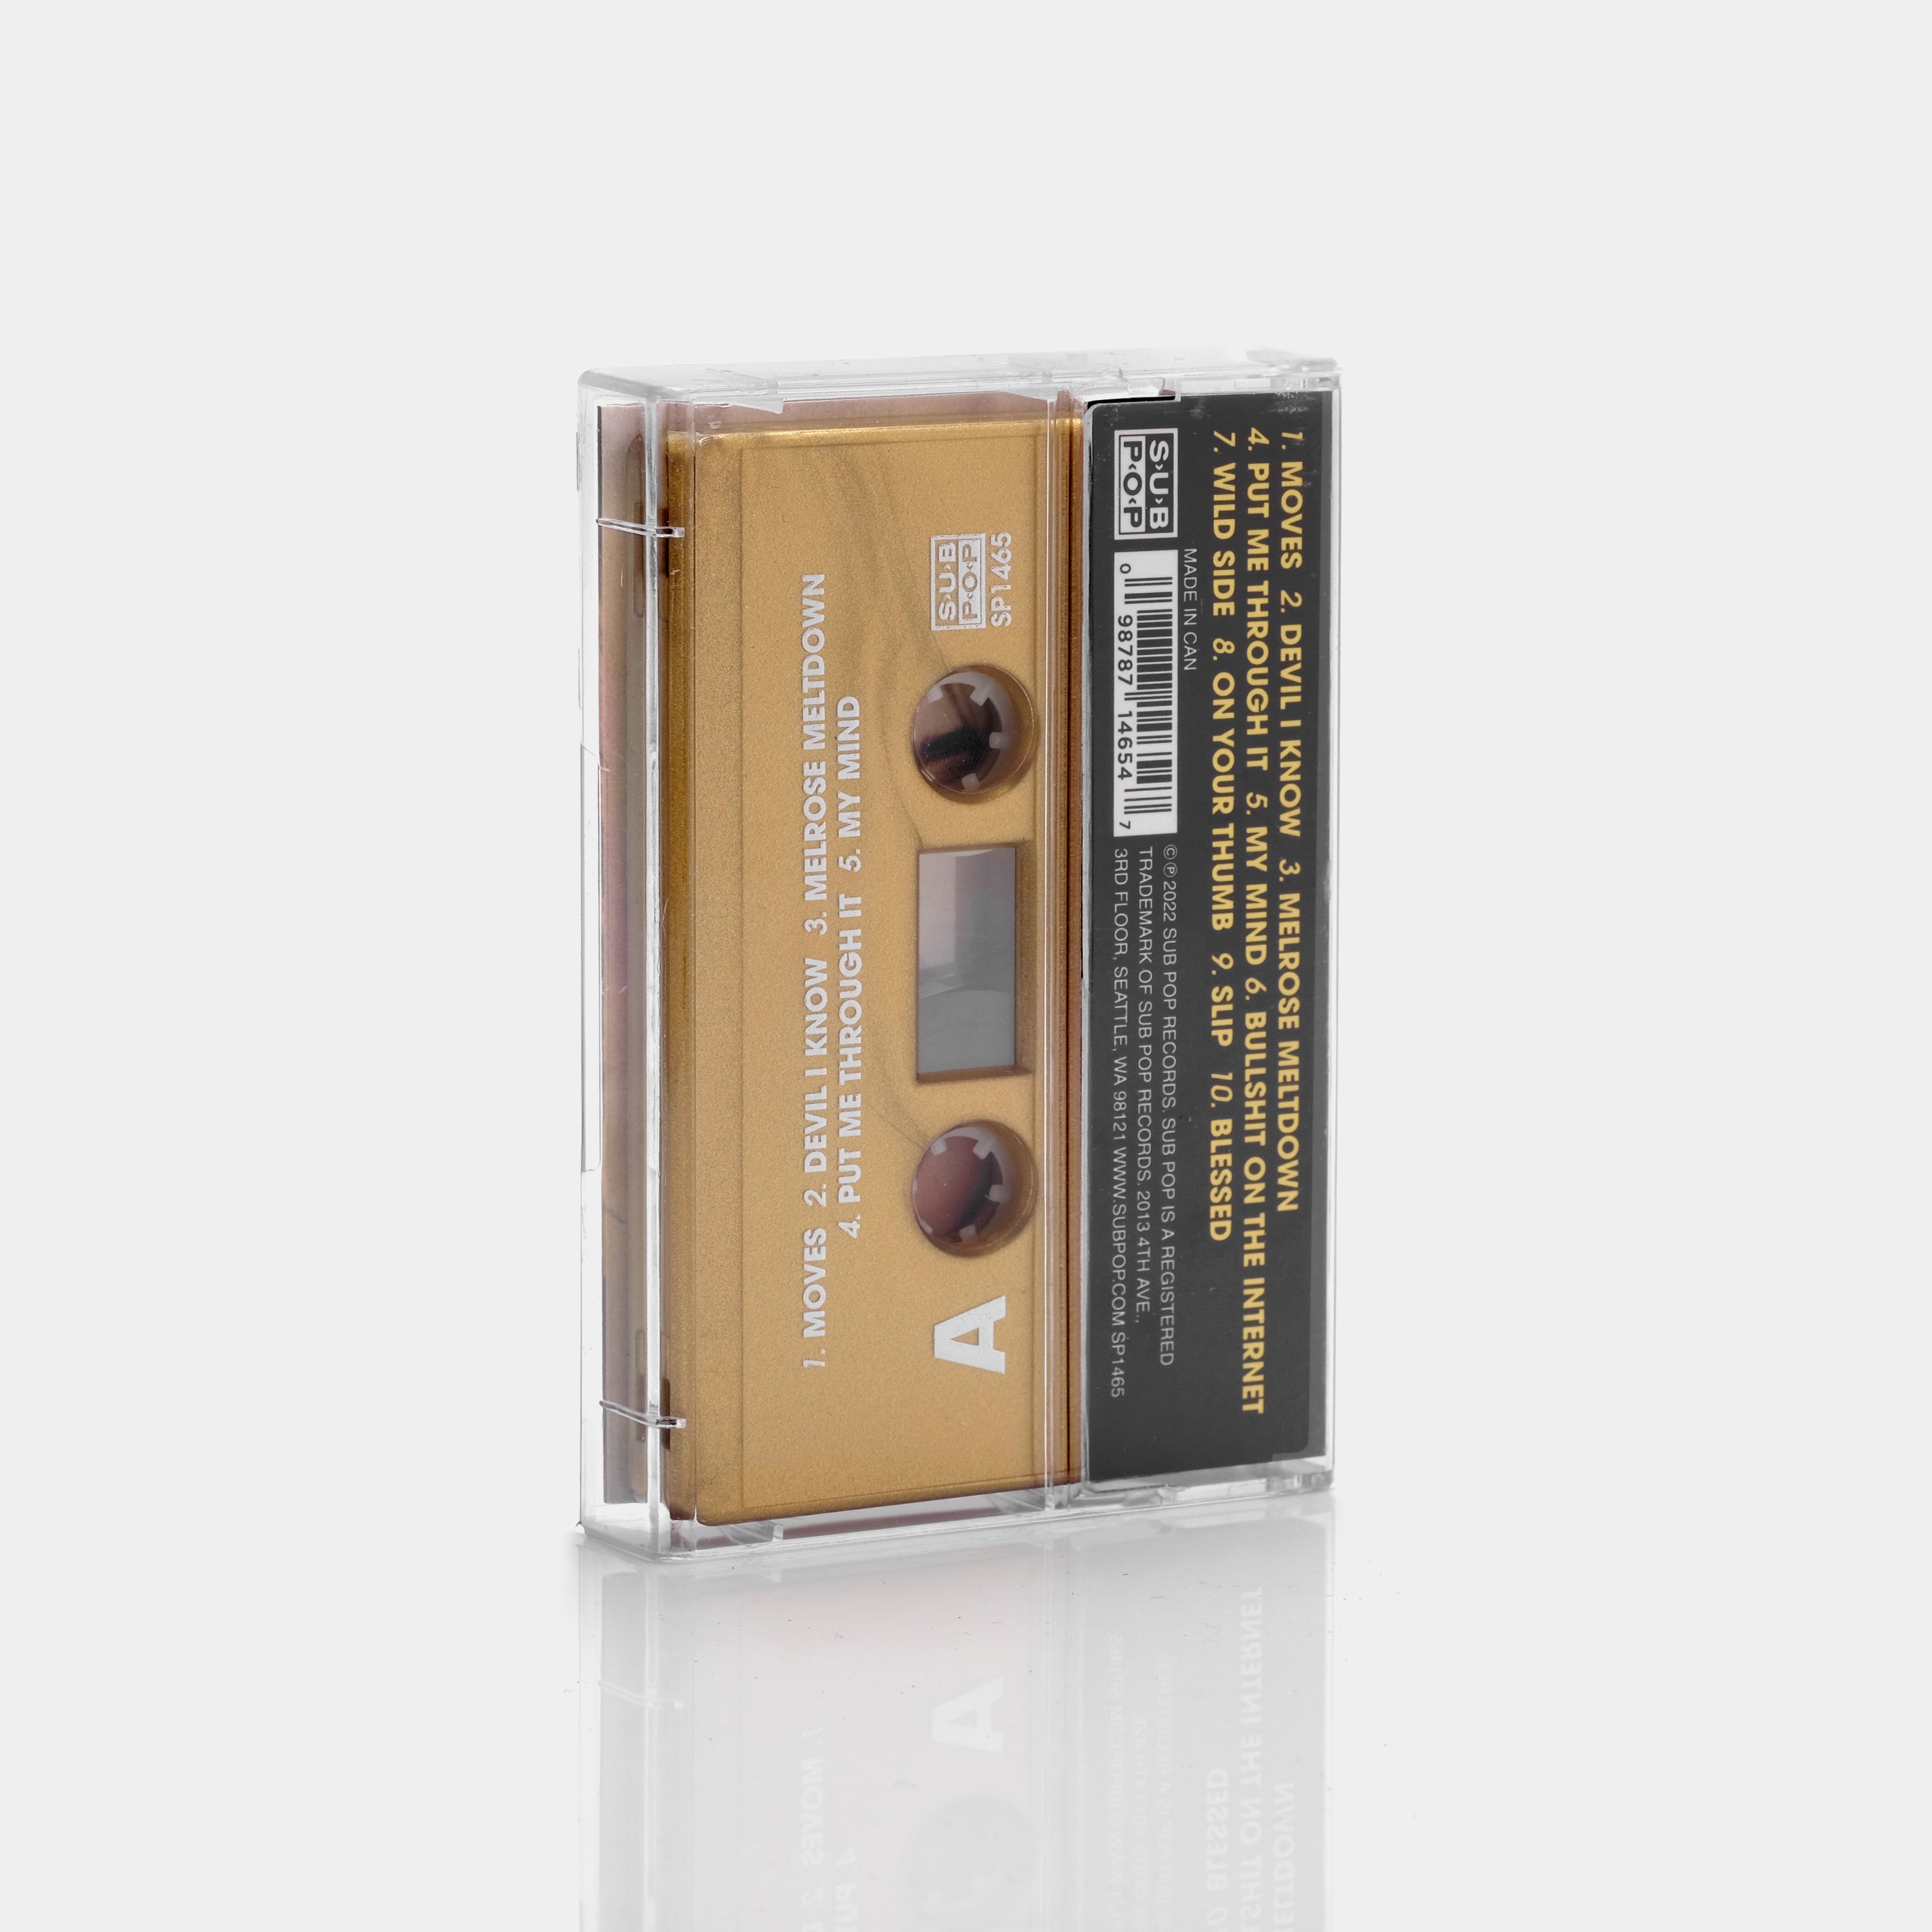 Suki Waterhouse - I Can't Let Go Cassette Tape